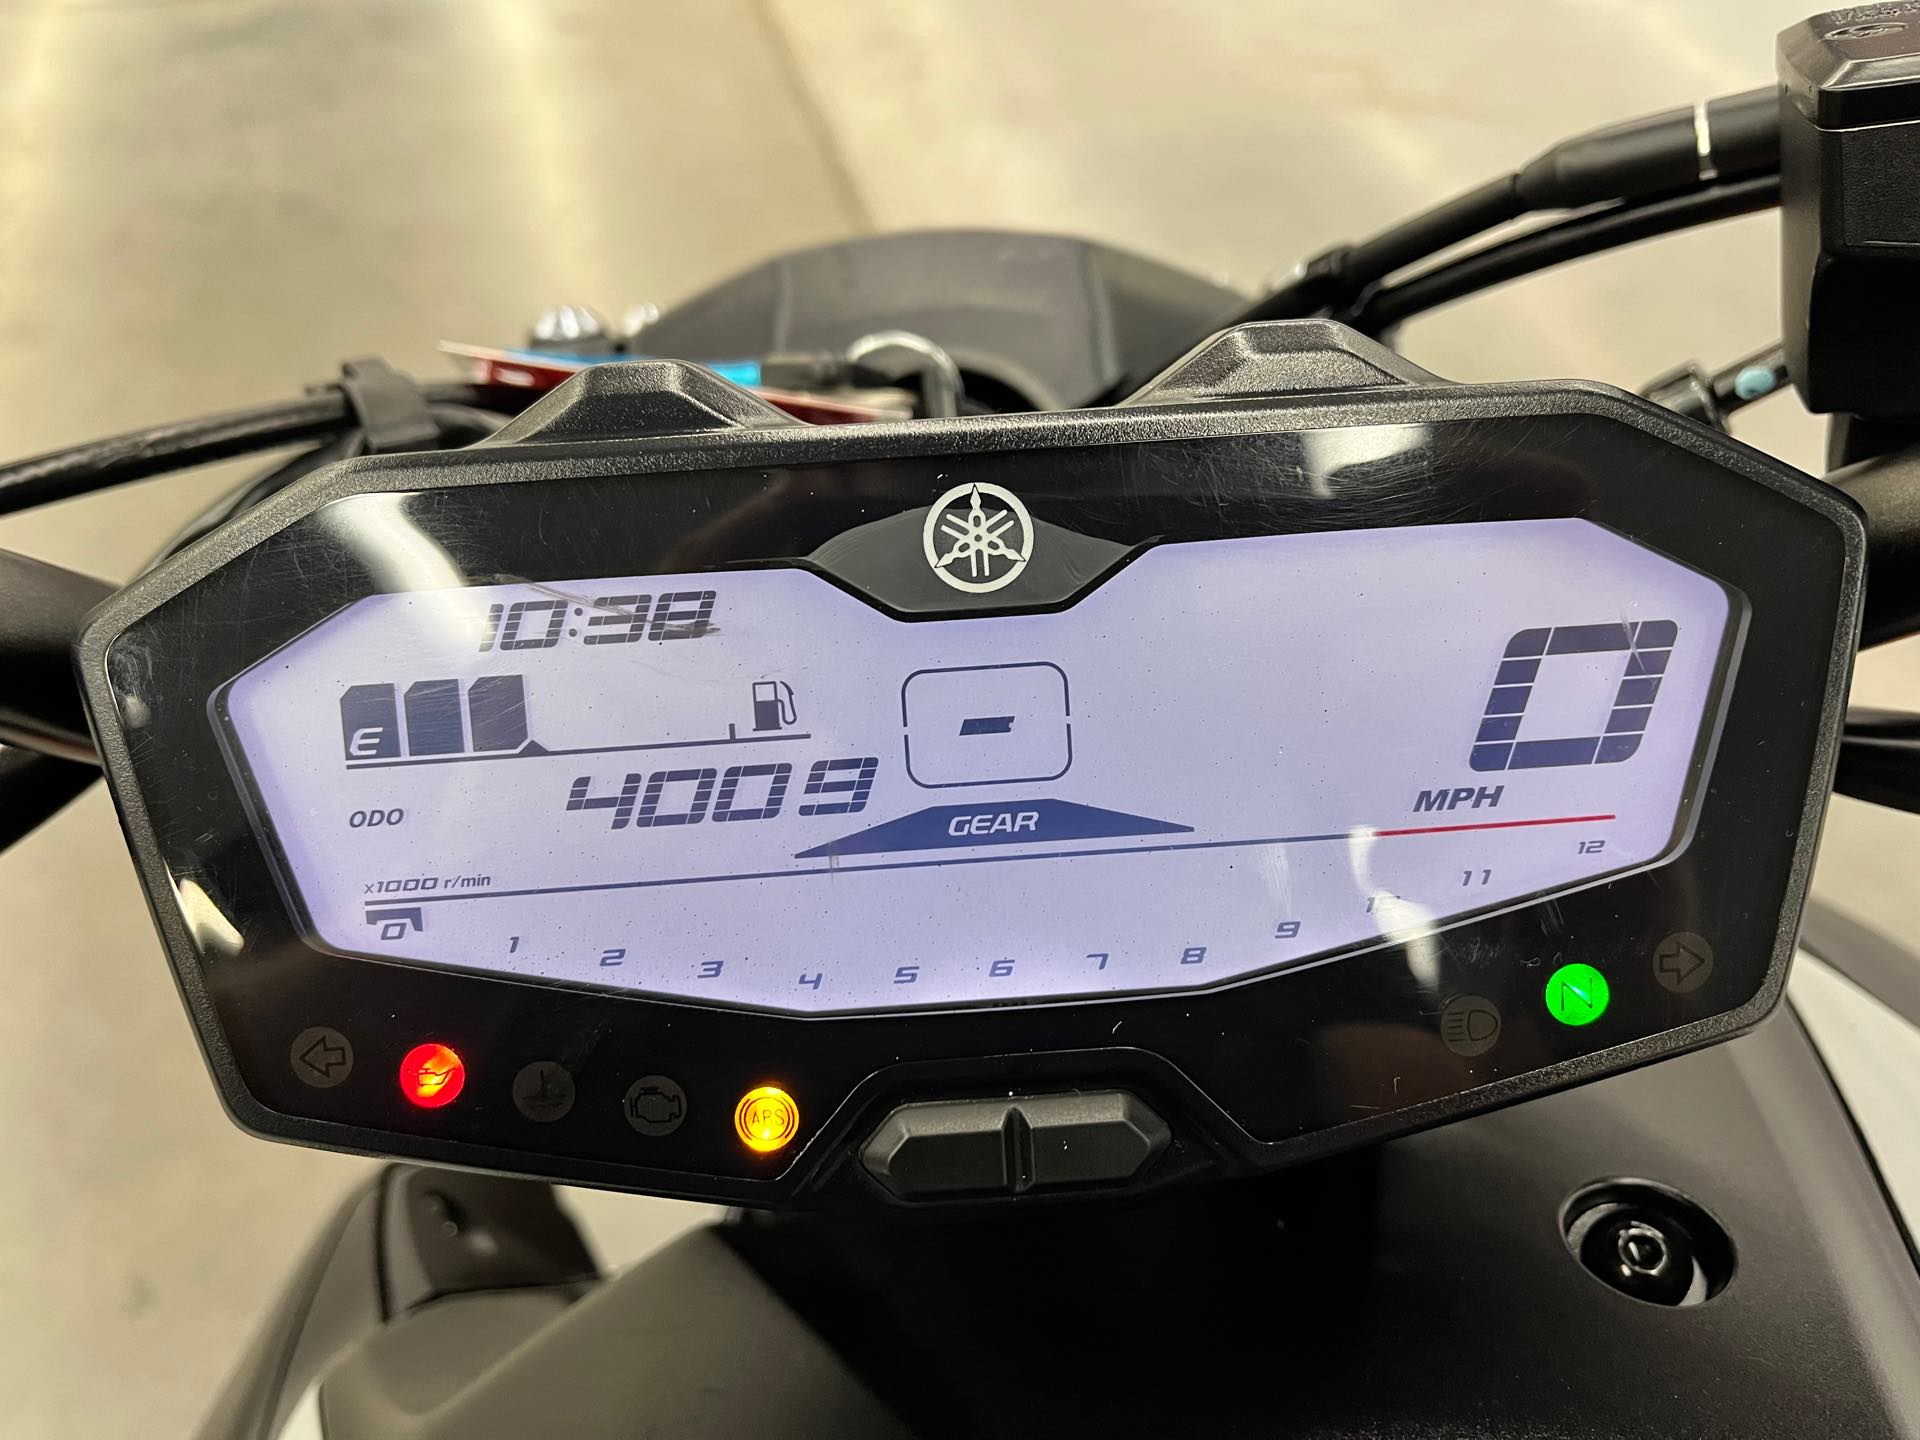 2020 Yamaha MT 07 at Aces Motorcycles - Denver